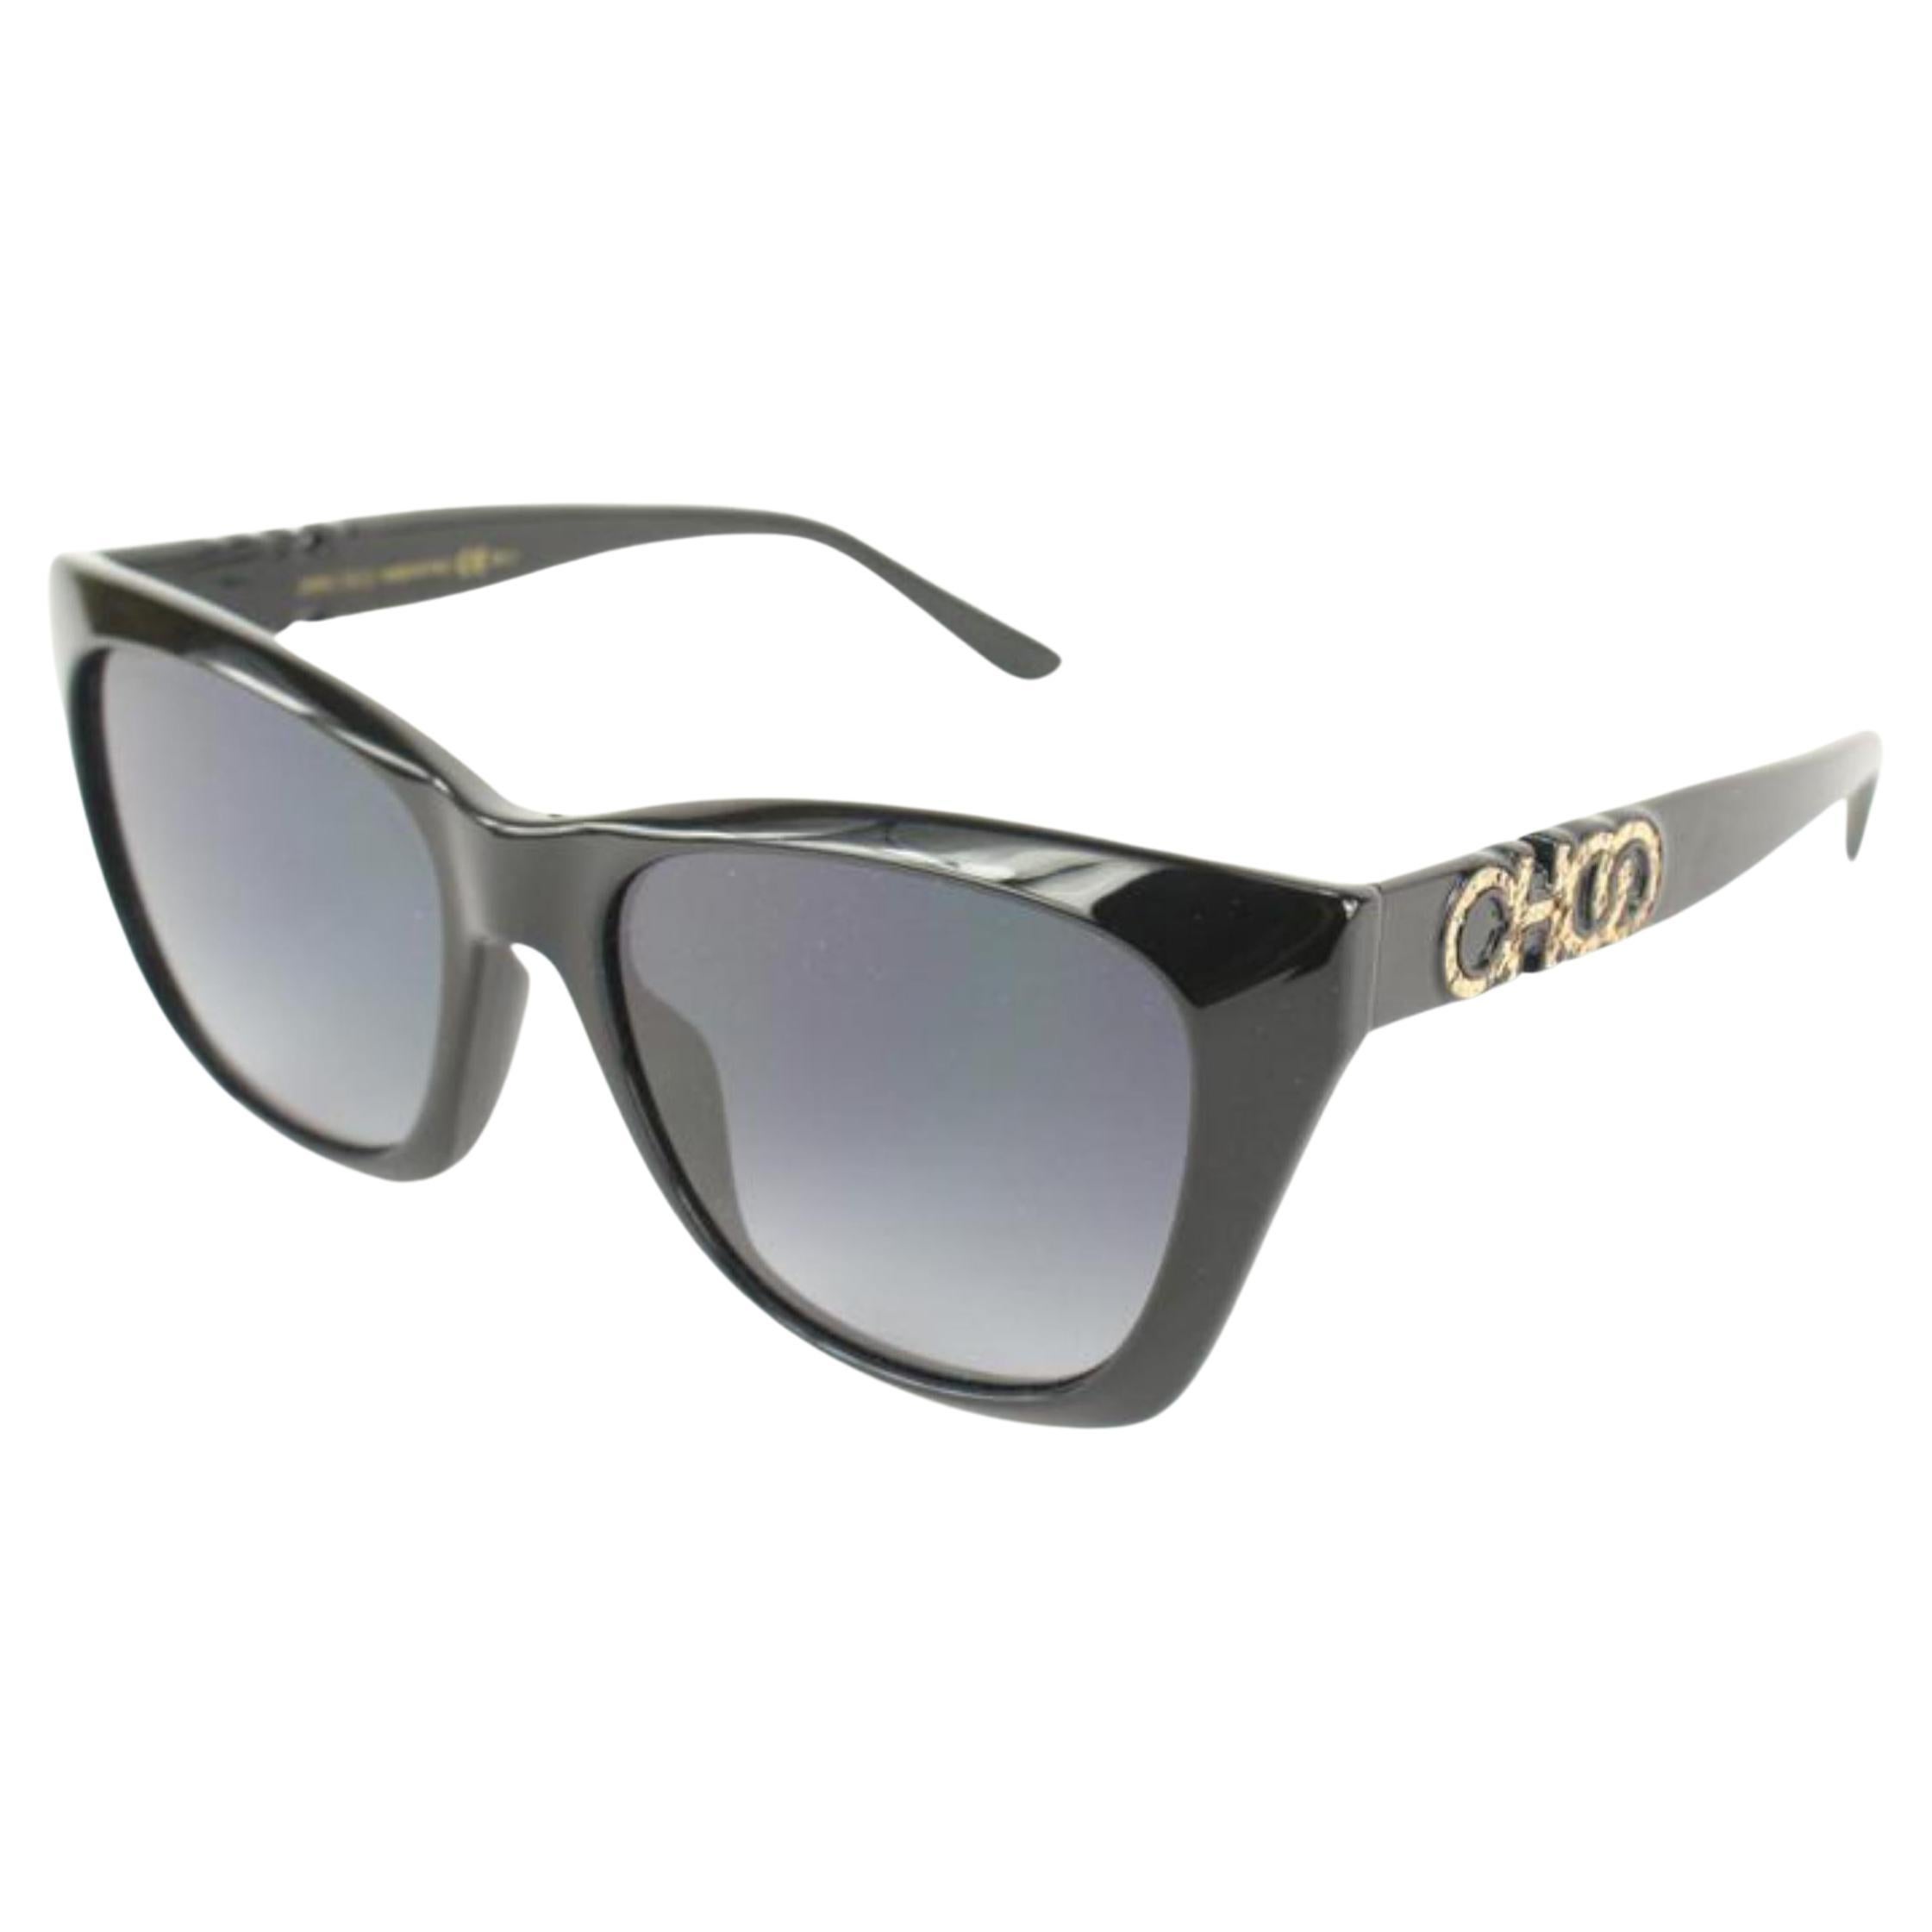 New Jimmy Choo Swarovski Sunglasses With Case and Box $595 at 1stDibs